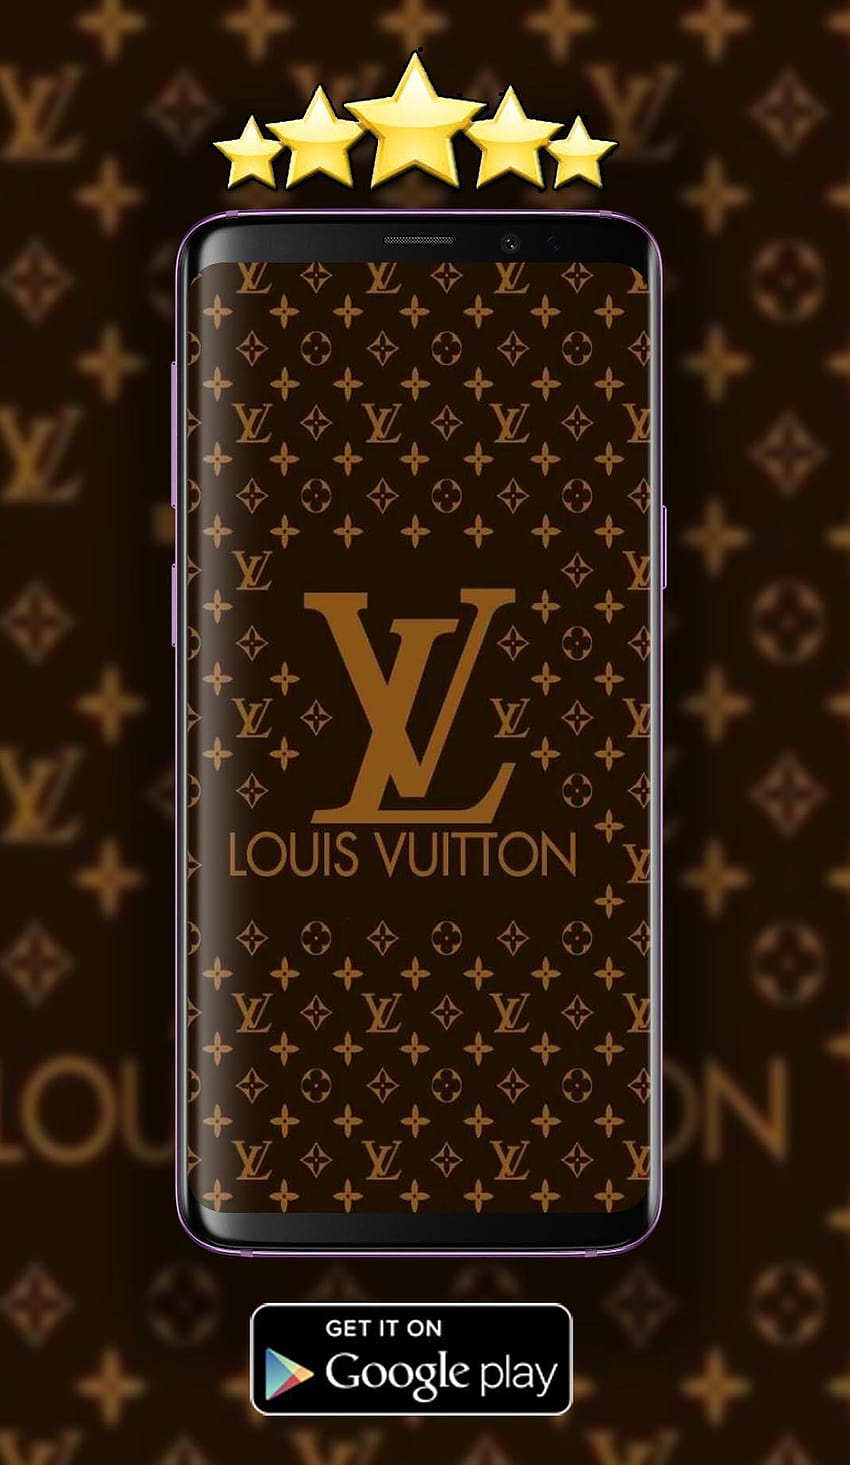 BGYO's Louis Vuitton OOTDs trend on social media